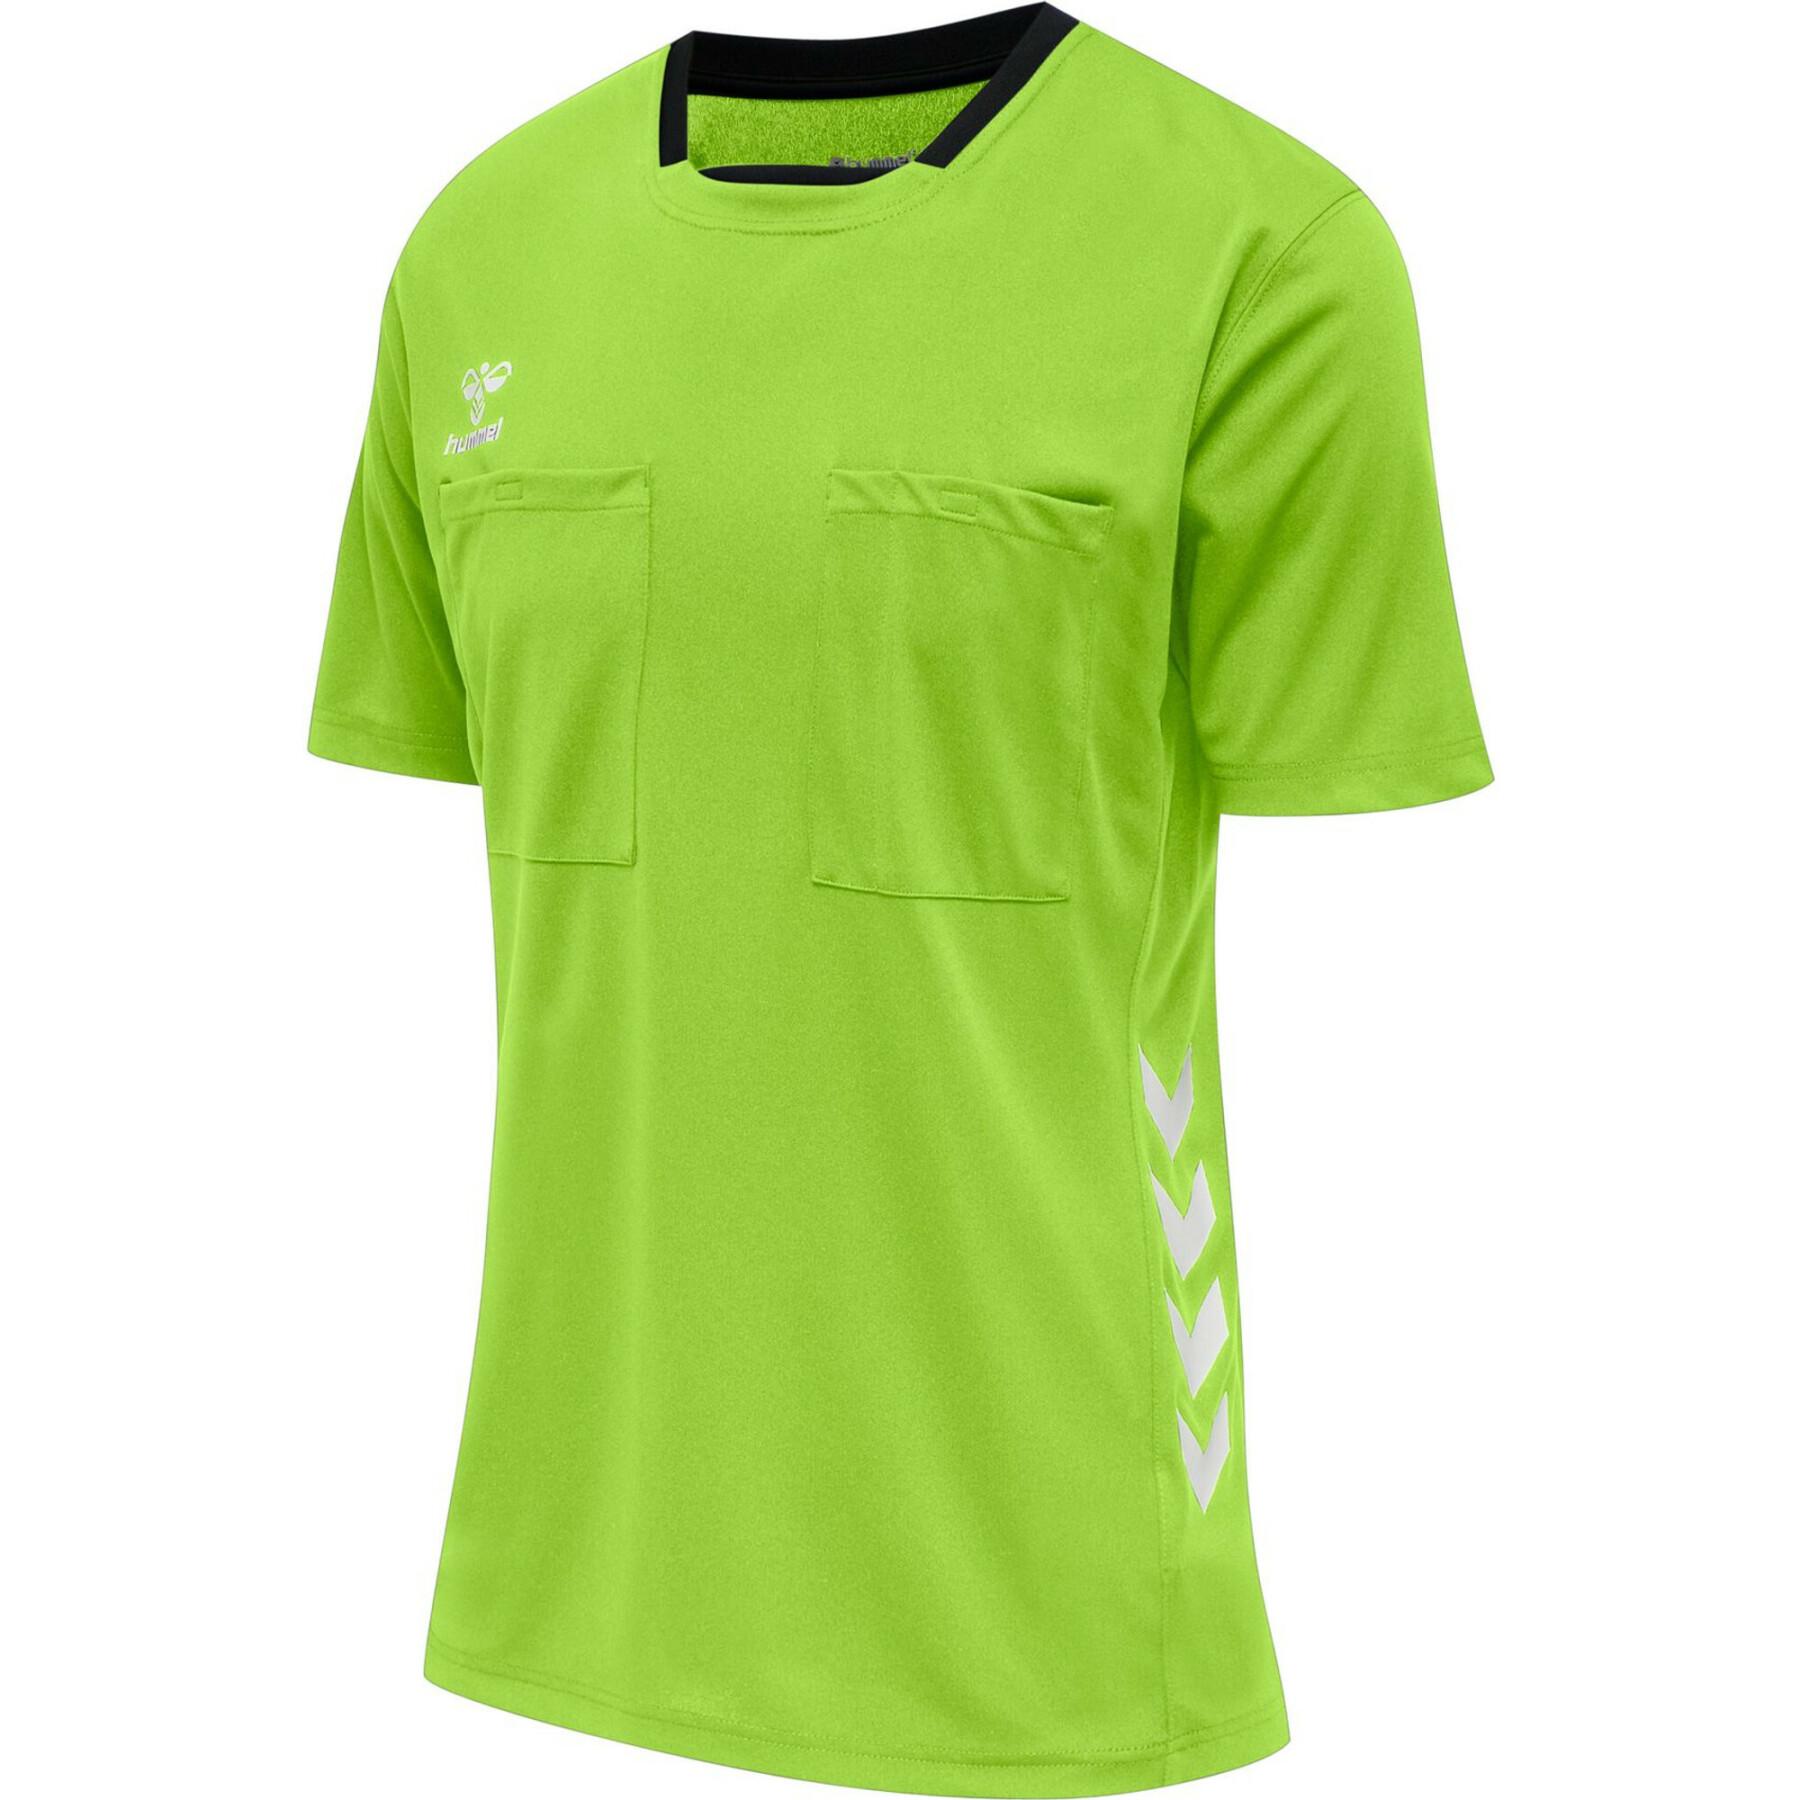 Women\'s T-shirt wear Hummel - - wear & - shirts chevron hml Women\'s Handball T-shirts referee polo